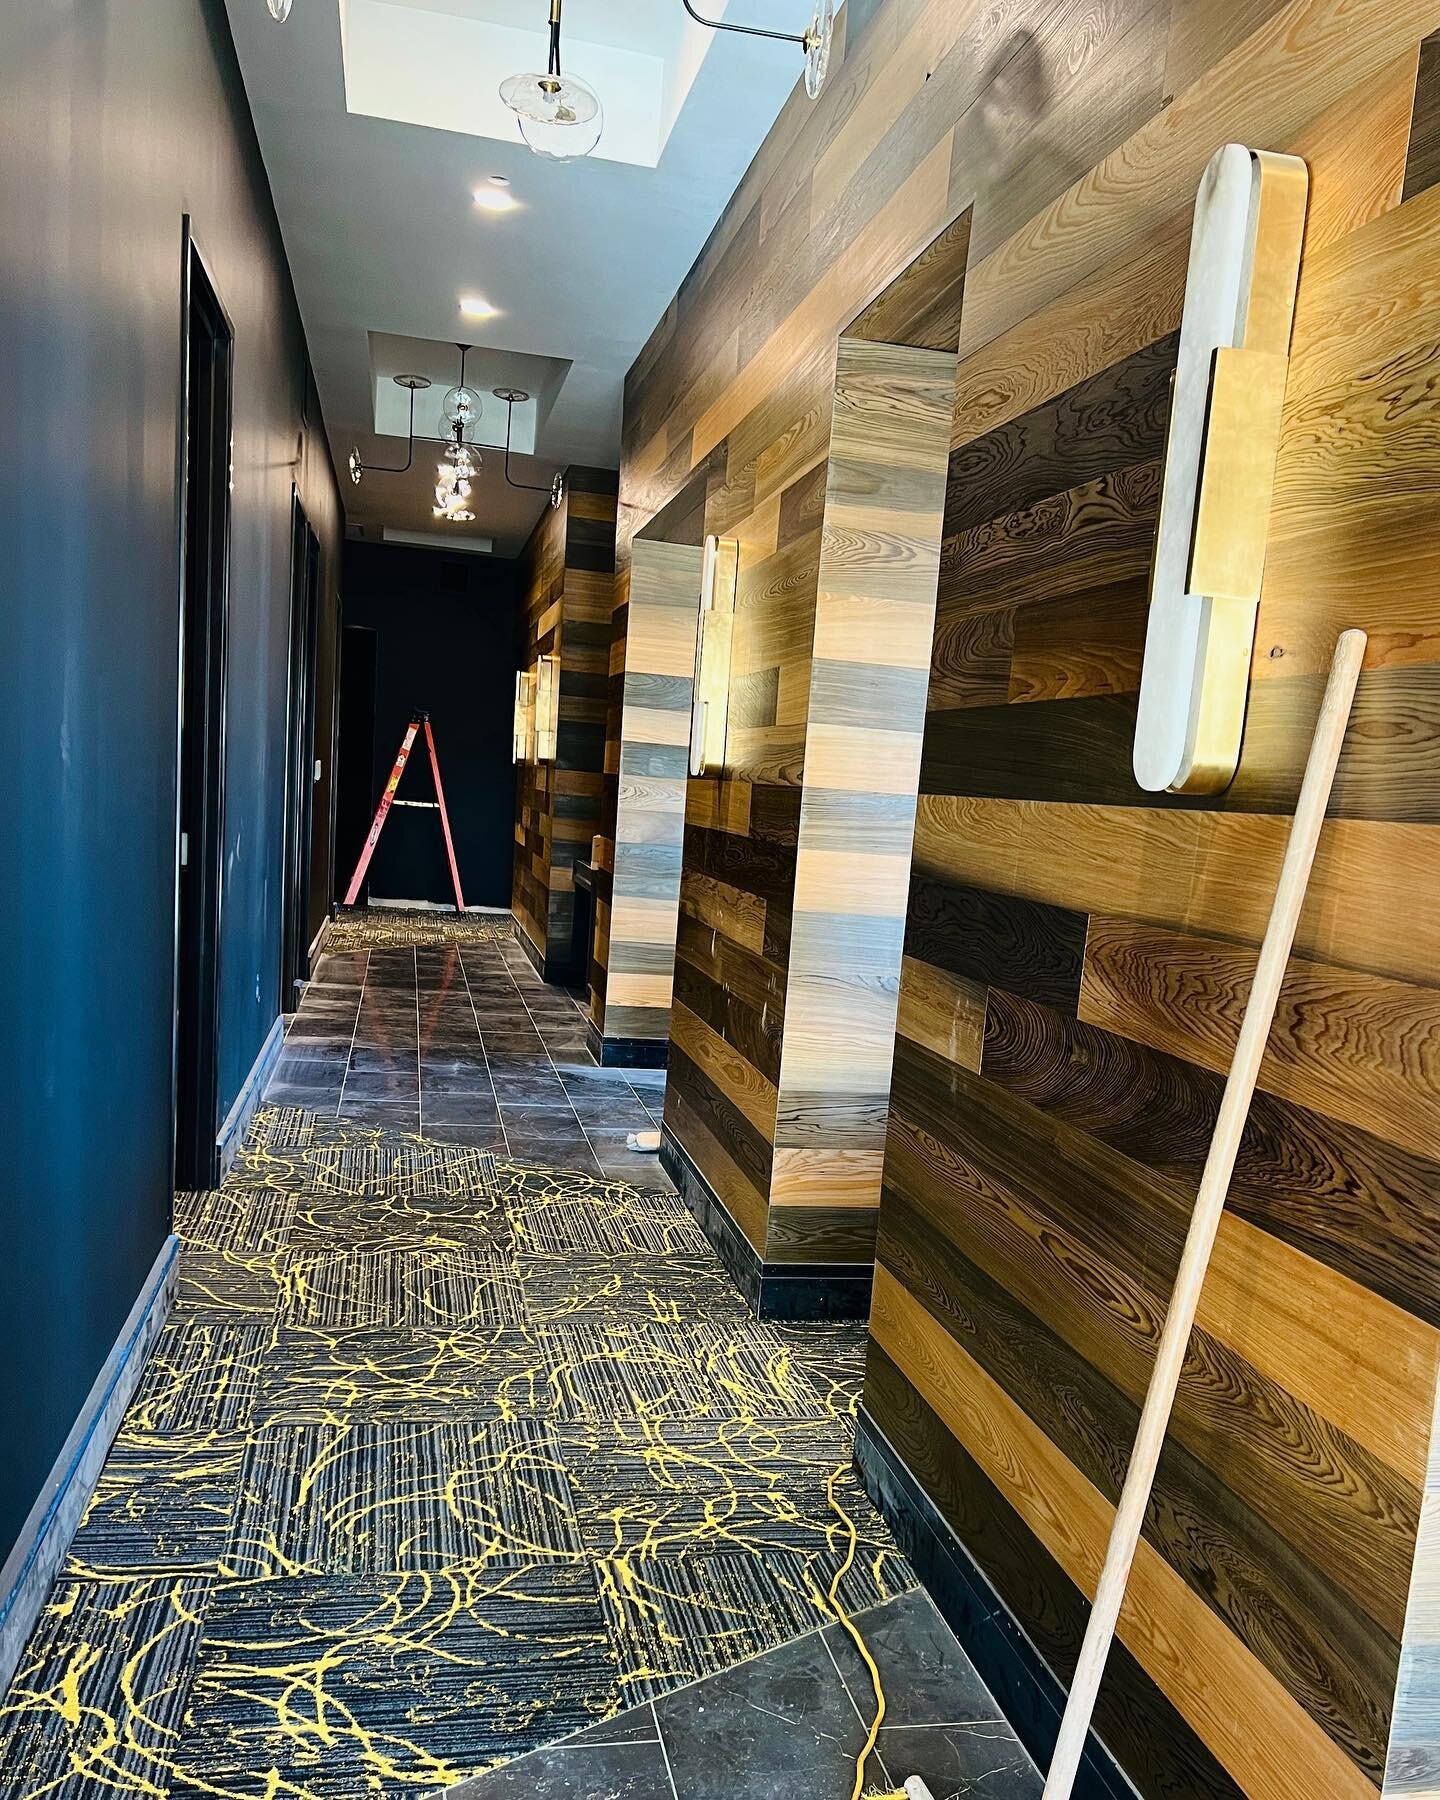 Sinker Cypress wood paneling looking great! Looking forward to seeing this project completed very soon! @woodcoltd @visualcomfort @kellywearstler @stanneberger